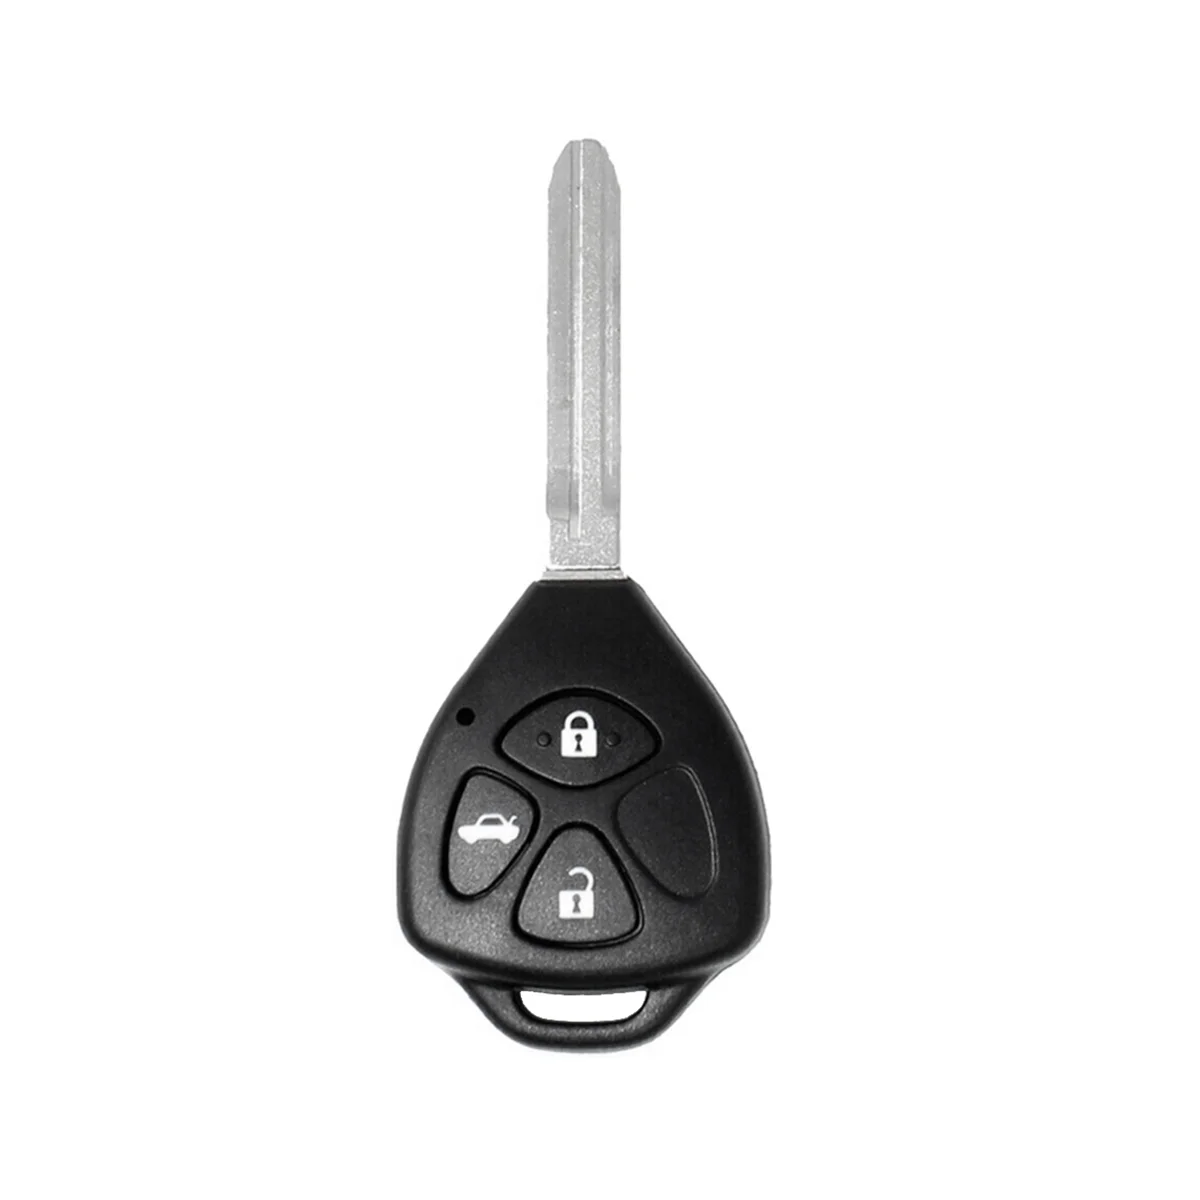 

KEYDIY B05-3 KD Remote Control Car Key Universal 3 Button for Toyota Style for KD900/KD-X2 KD MINI/ URG200 Programmer